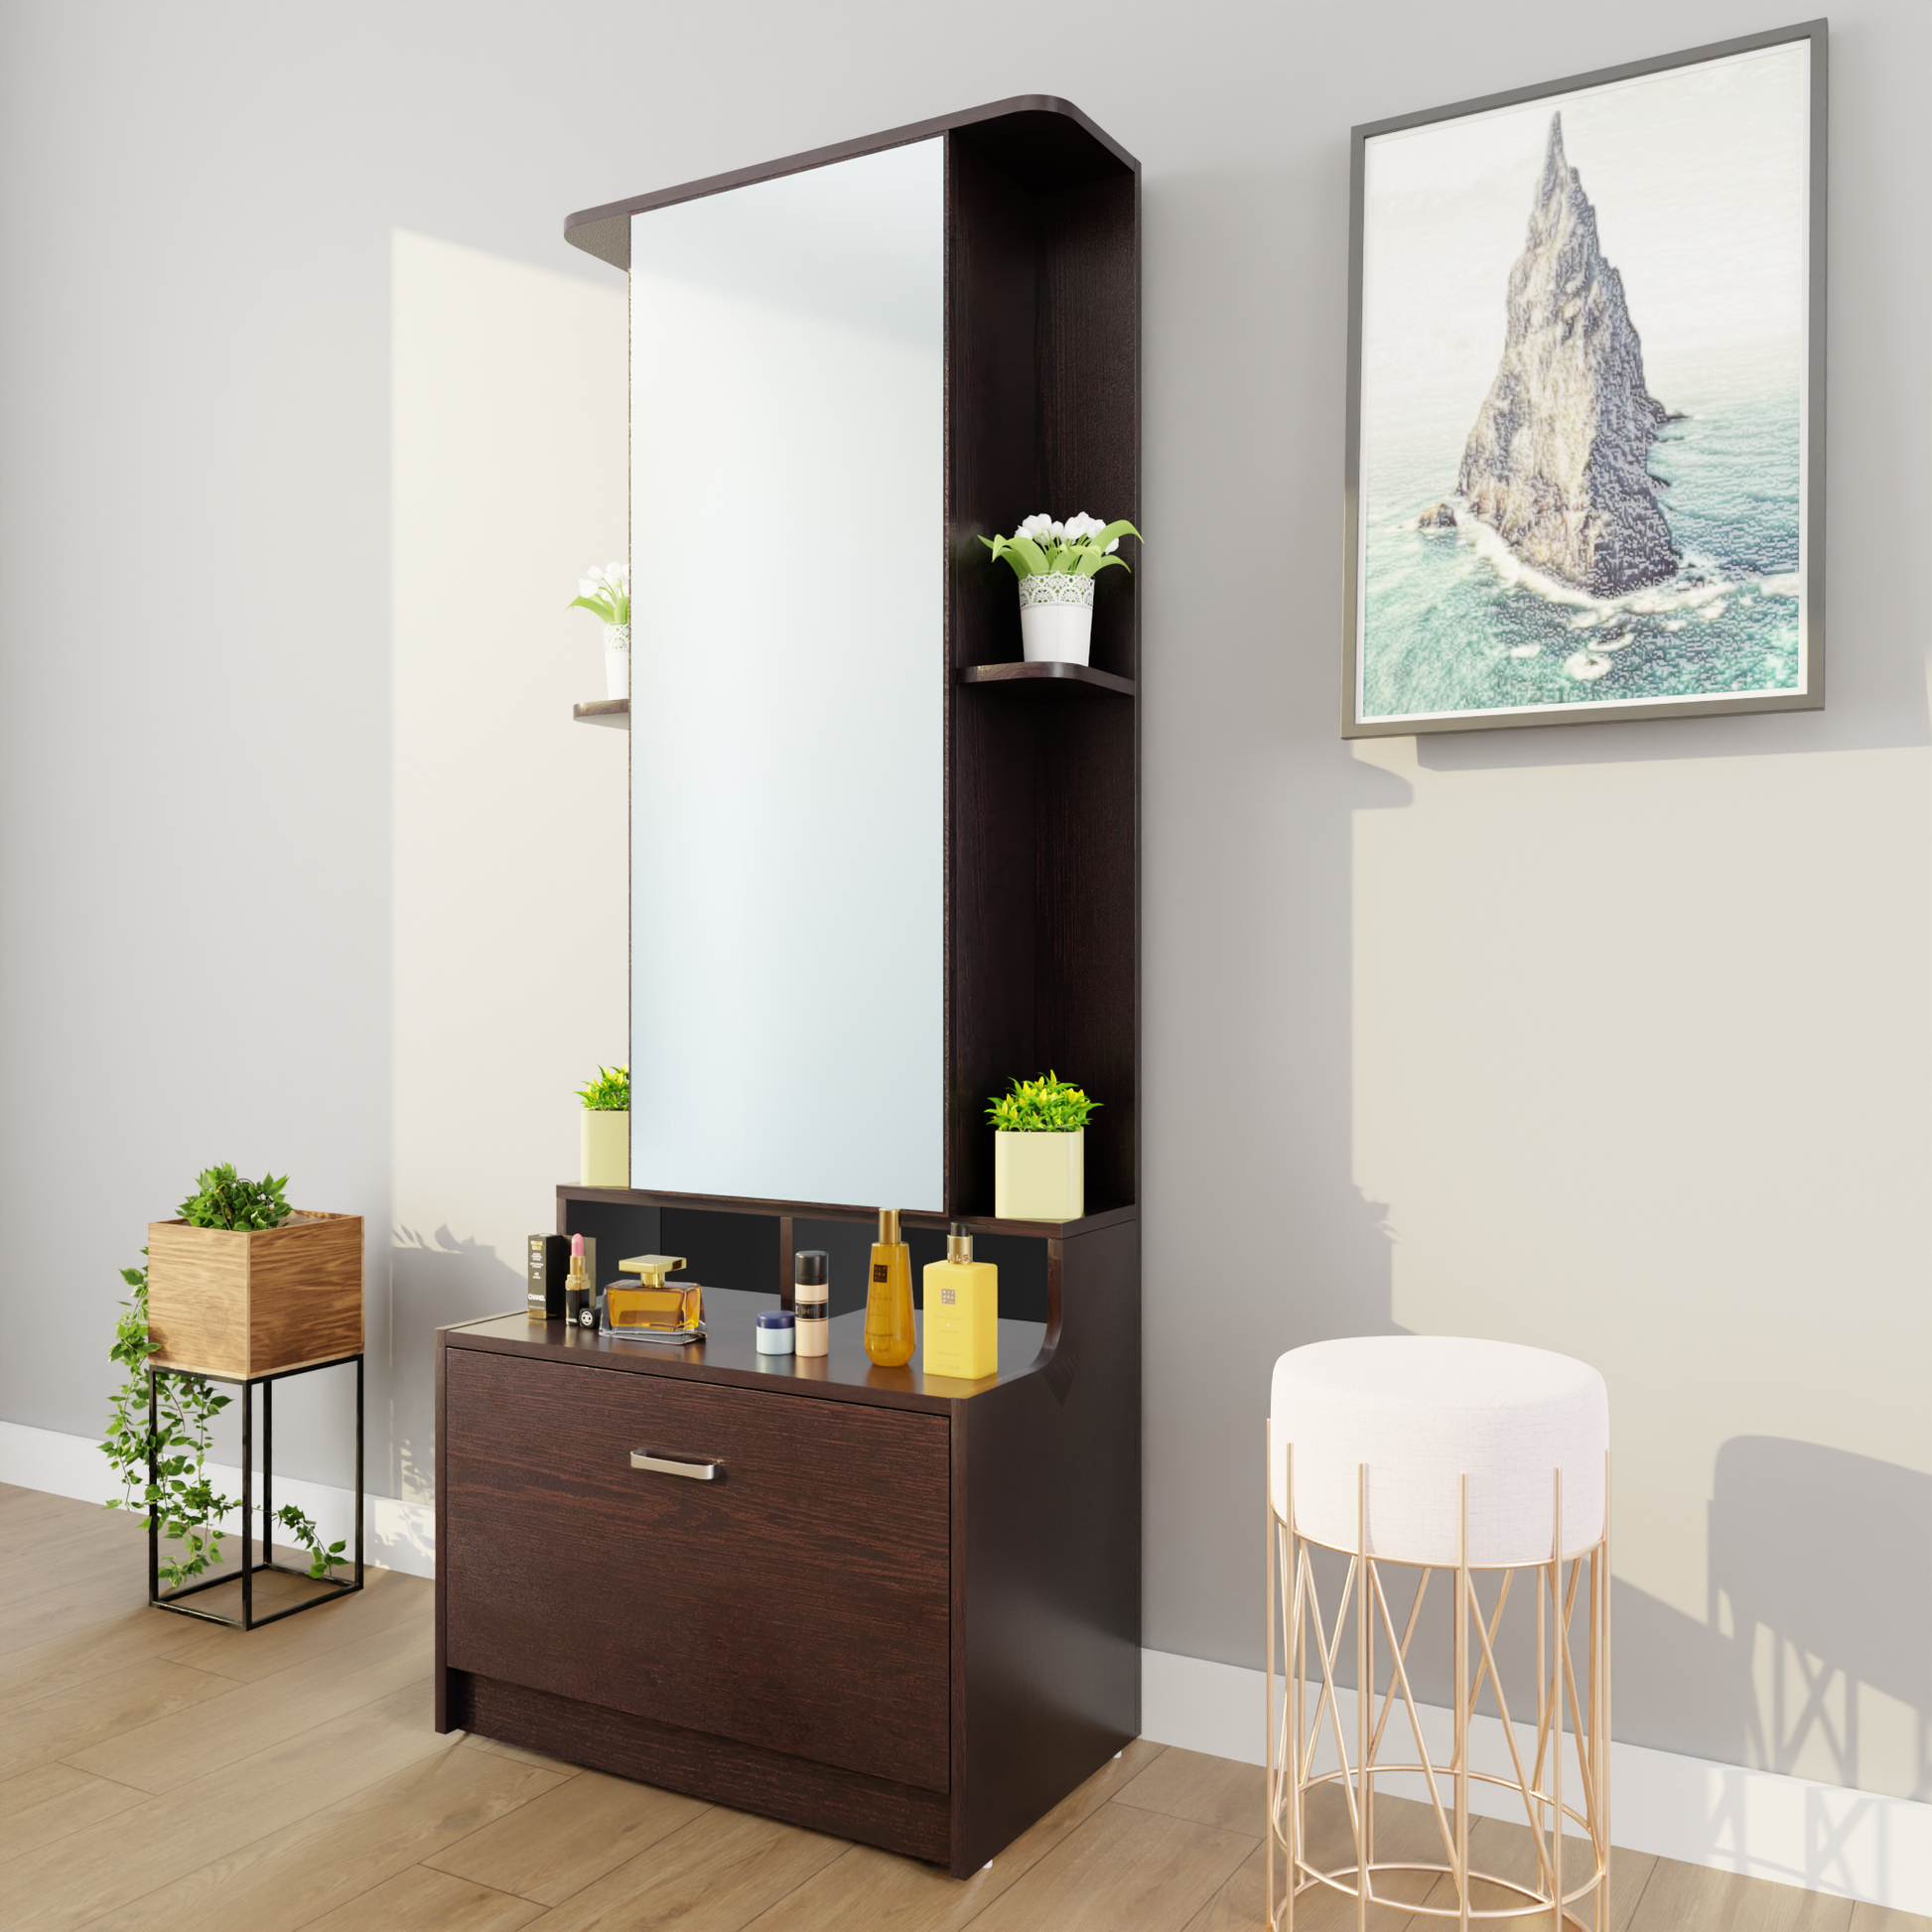 Dressing Table with Mirror Door | Drawer & Shelves Dressing Table VIKI FURNITURE   